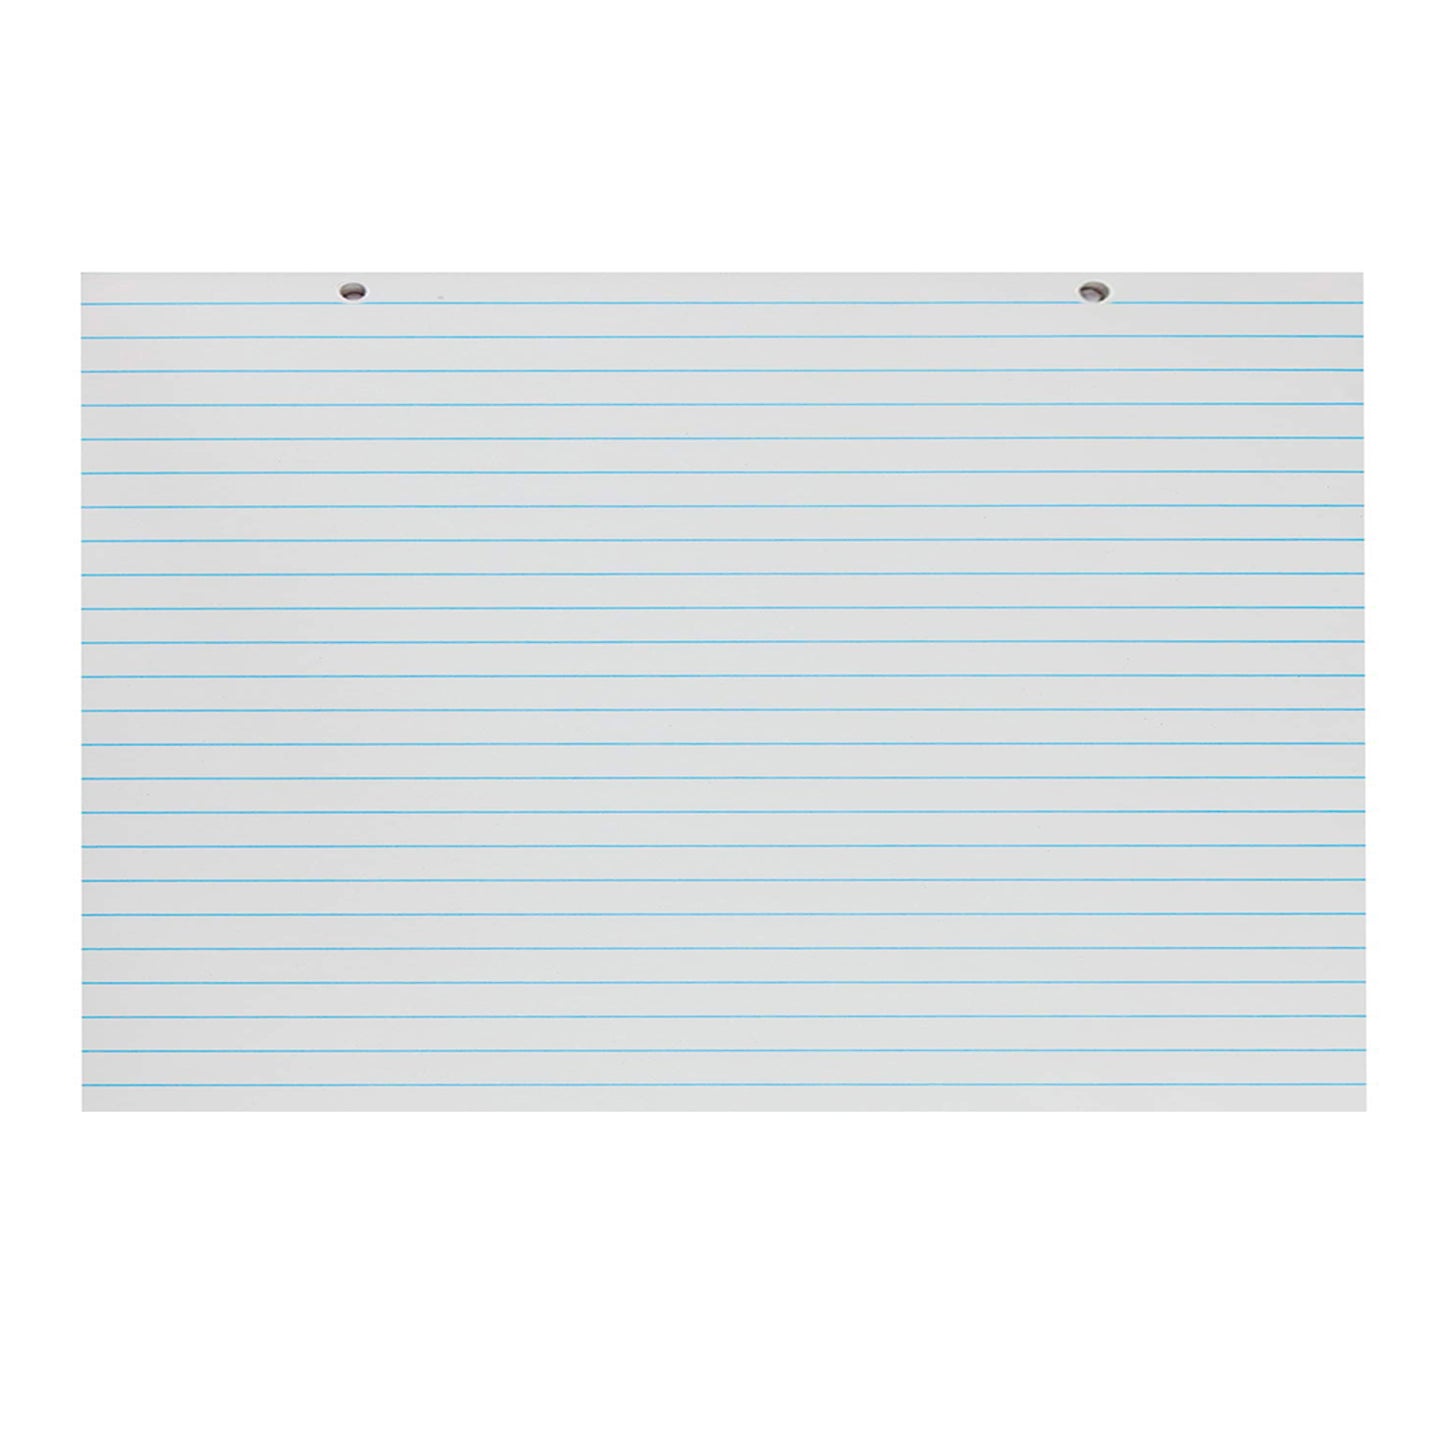 34" x 22" Flip Chart Paper Pads, Lined - 100 Sheets